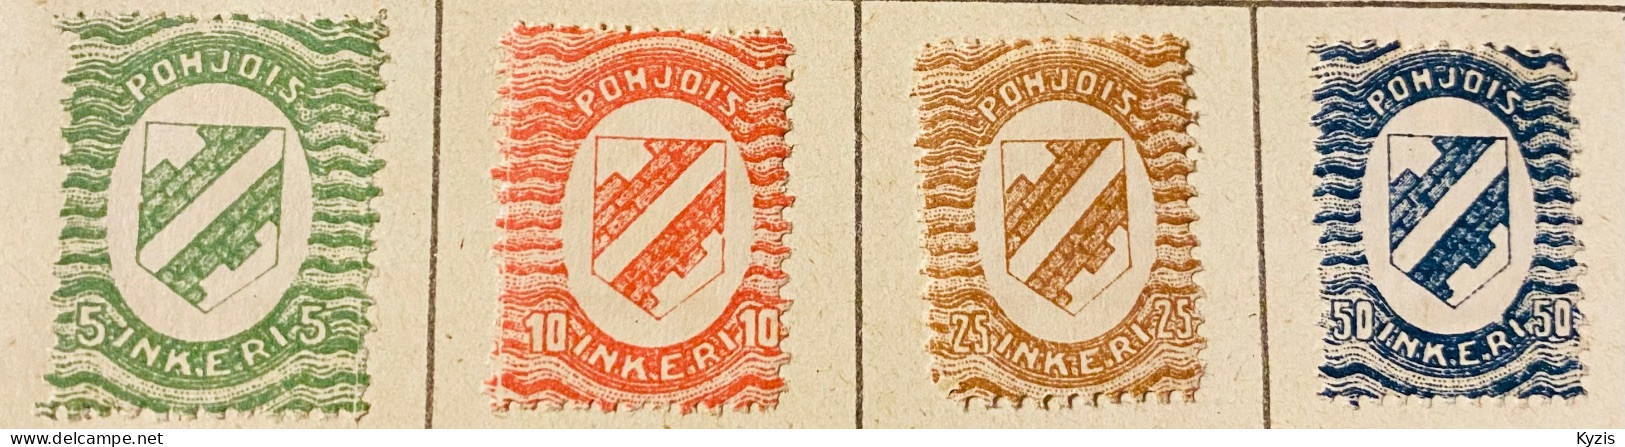 FINLANDE - SÉRIE Ingermanland - Pohjois Inkeri 1920 - Unused Stamps